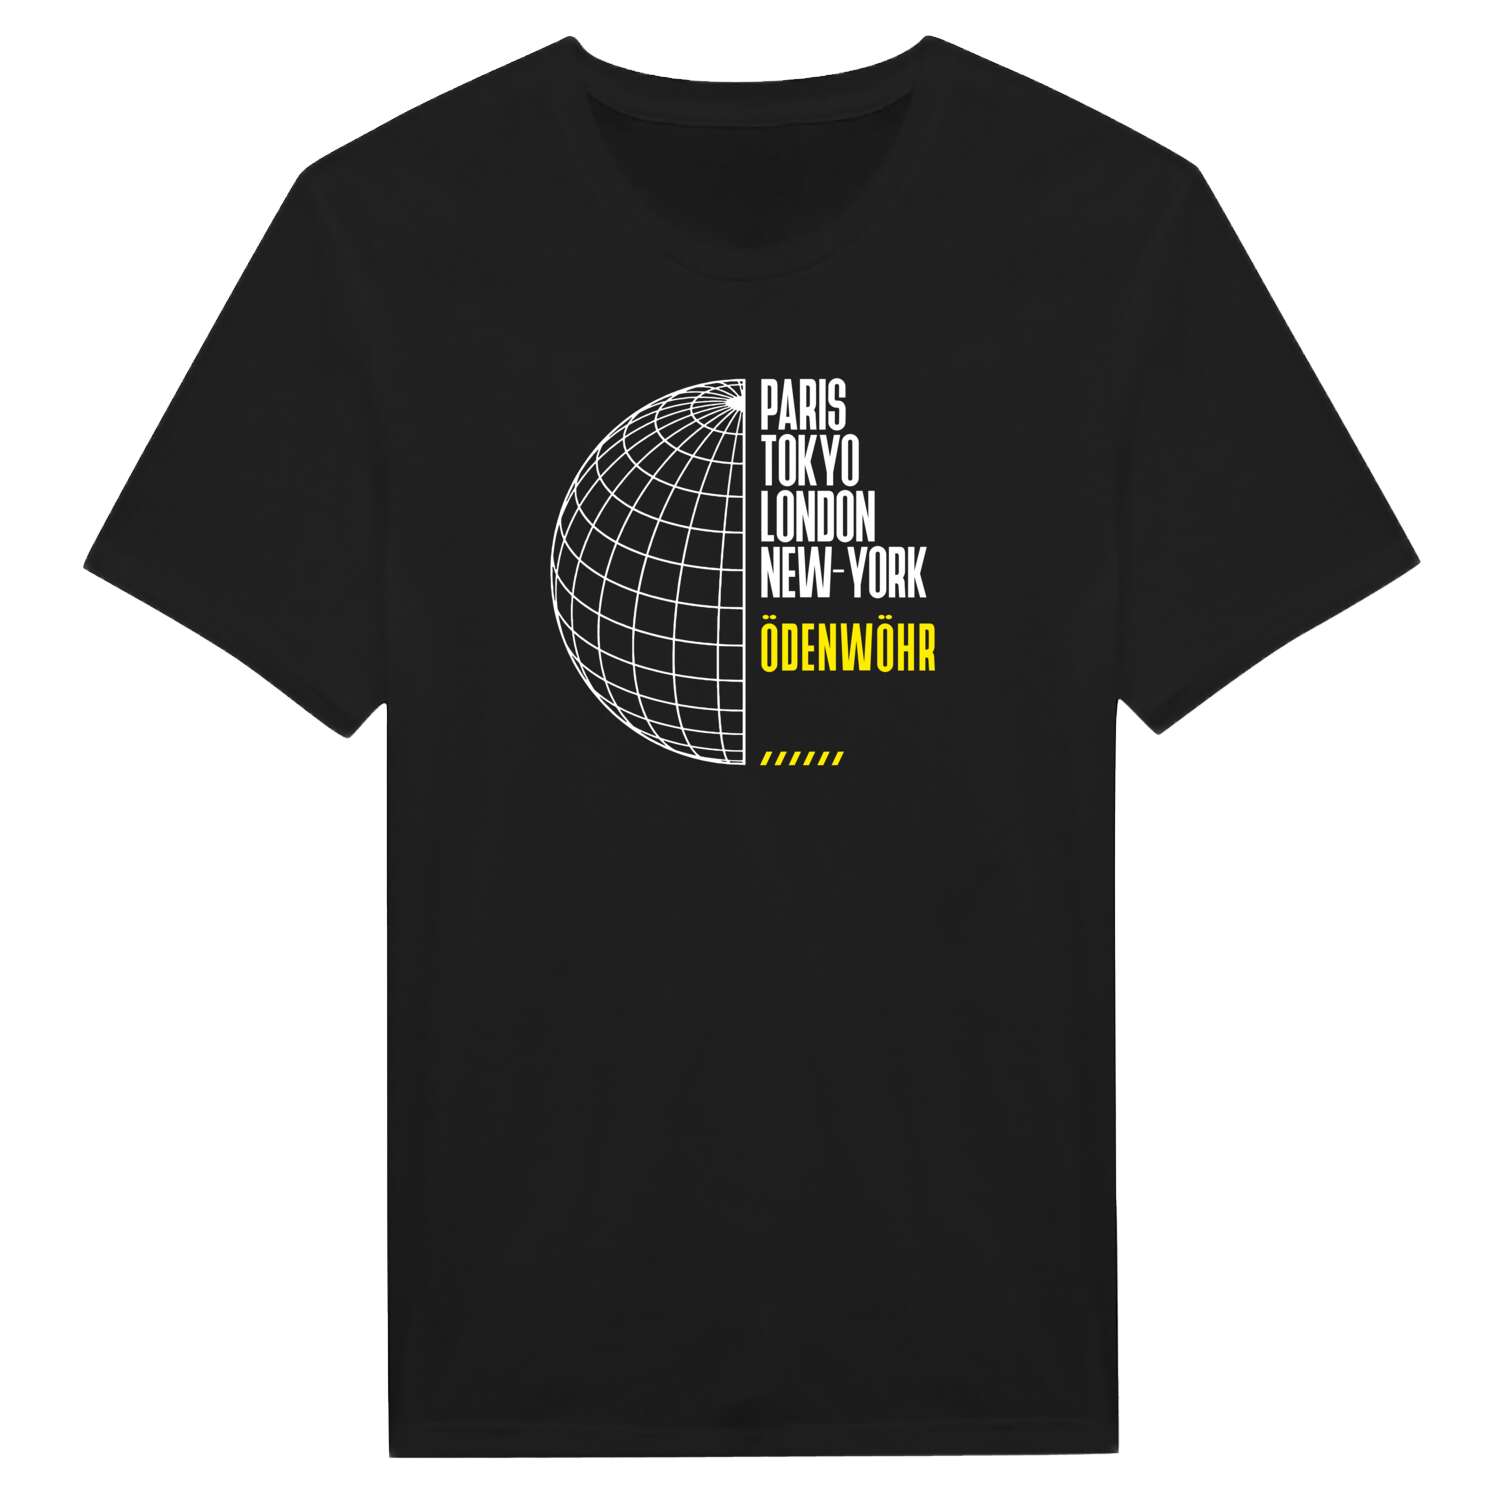 Ödenwöhr T-Shirt »Paris Tokyo London«